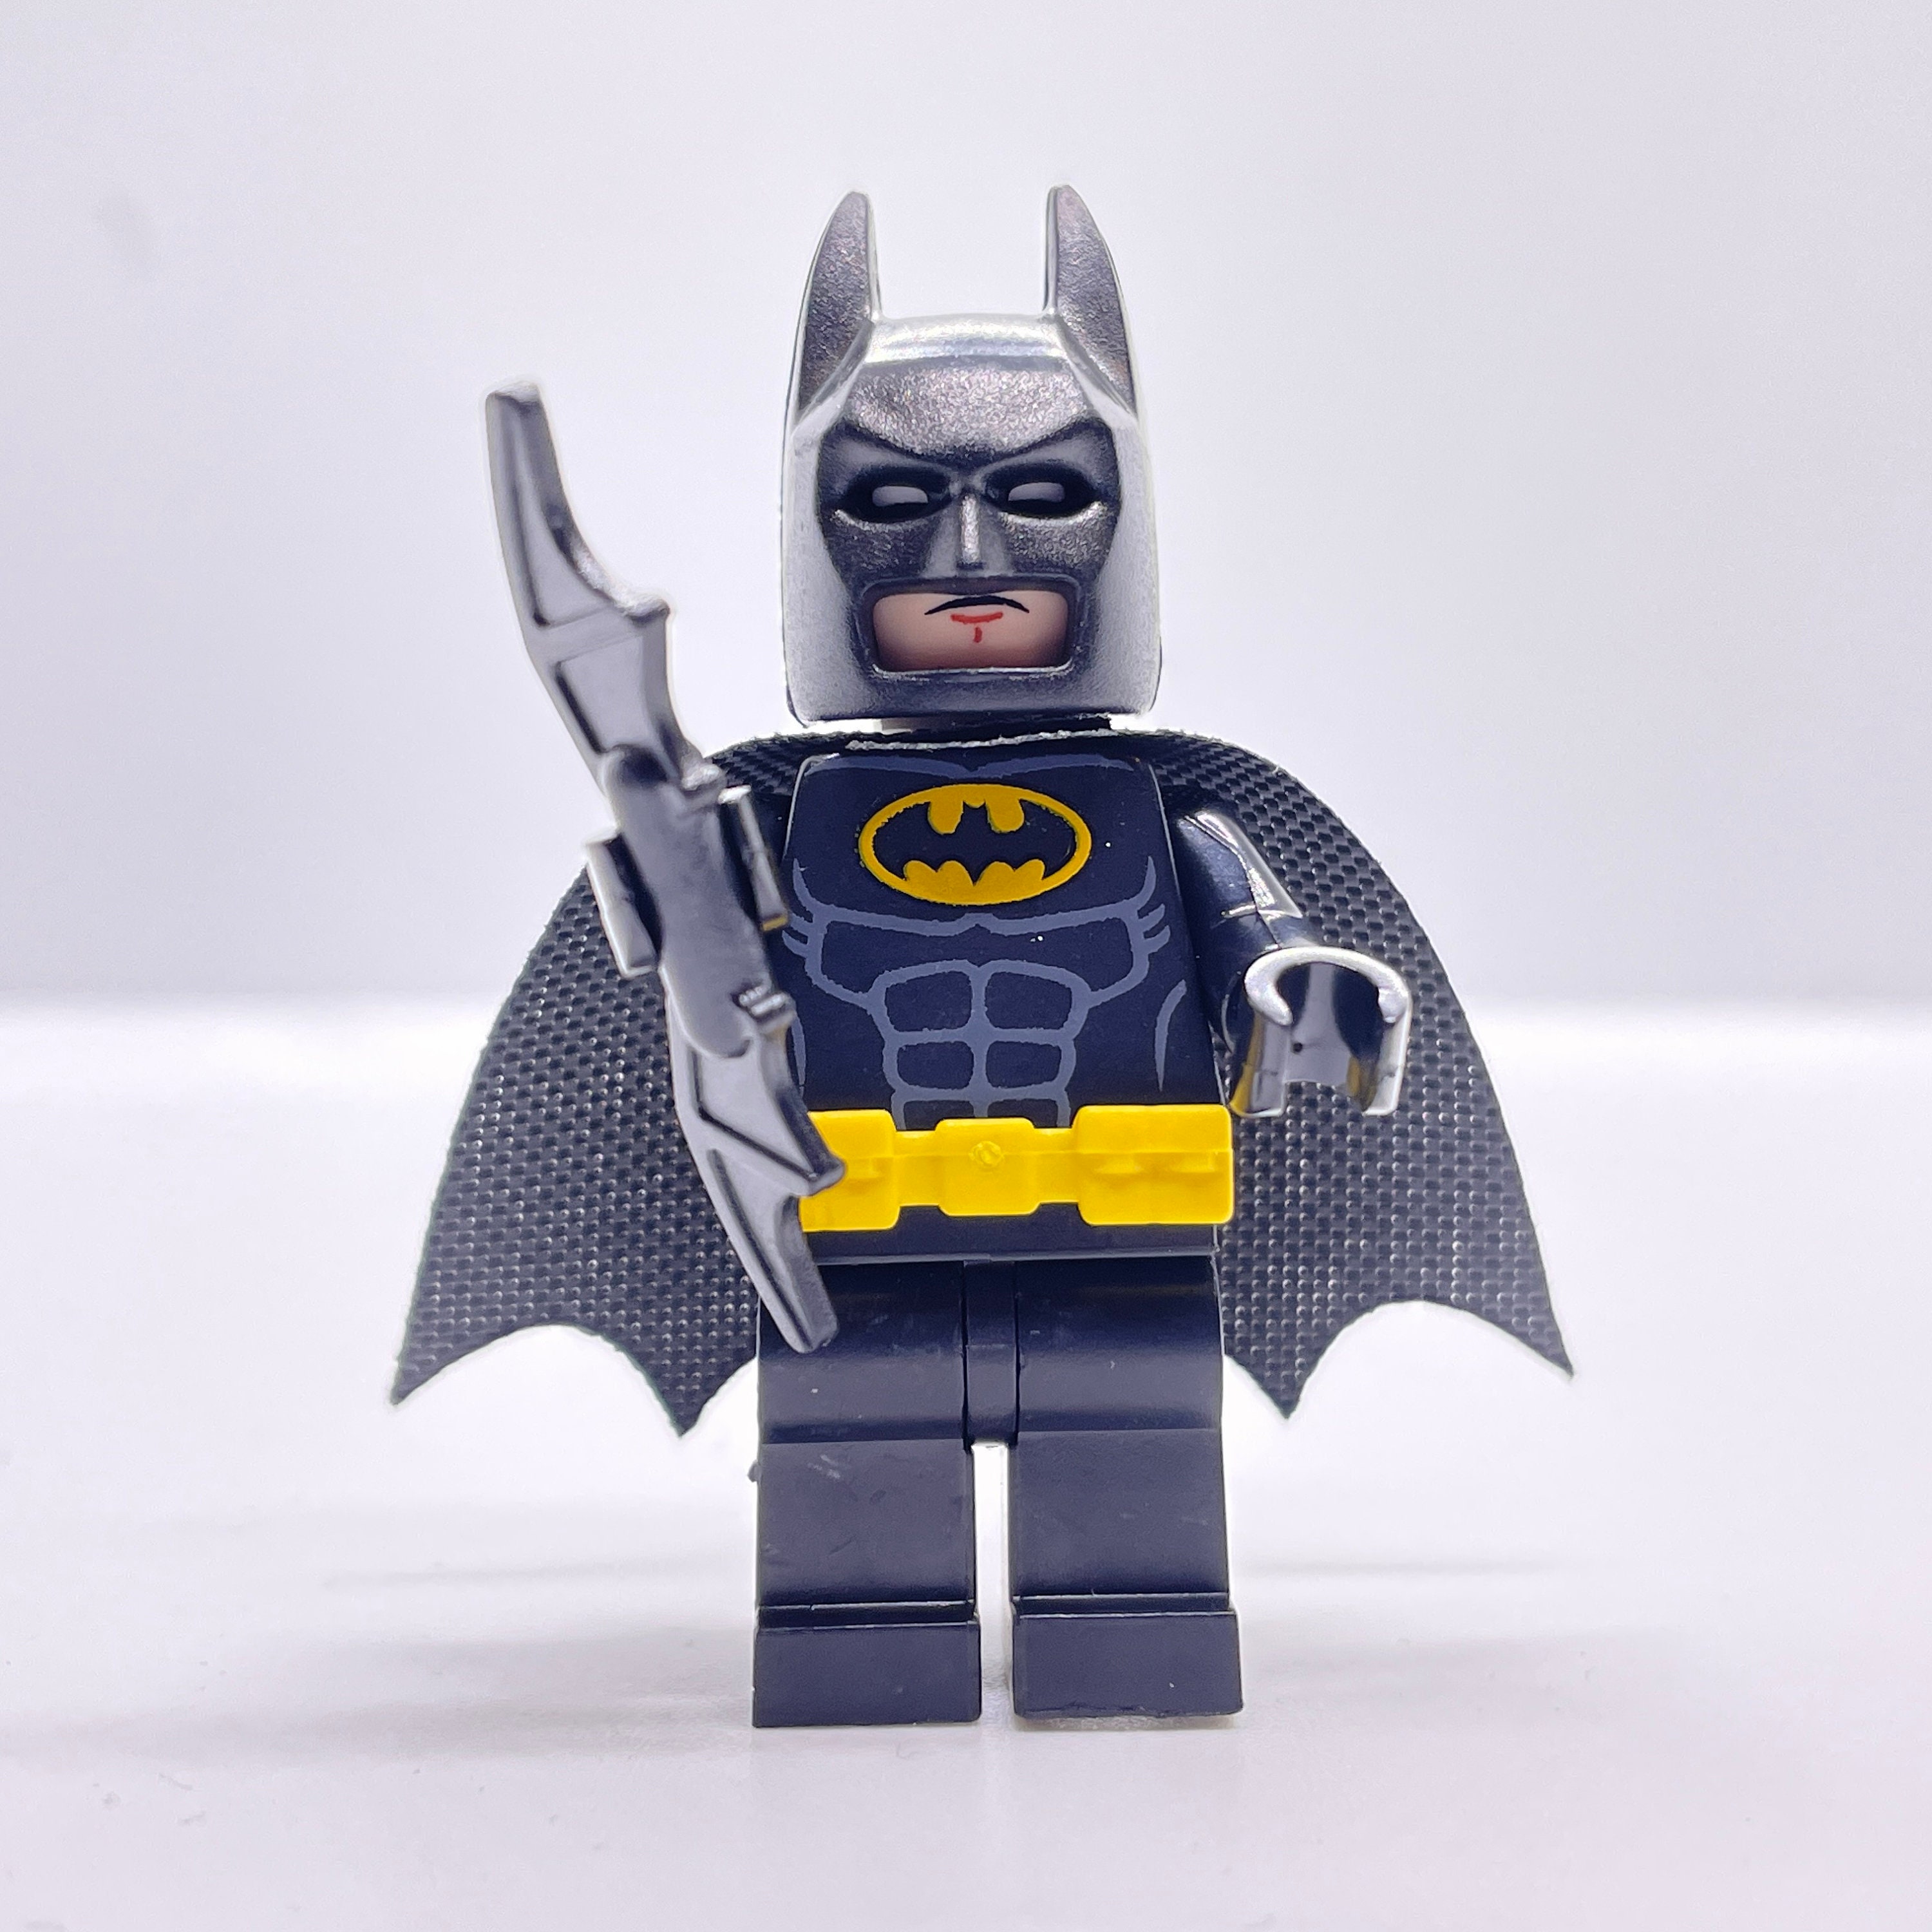 New LEGO DC Batman Sets Found at Vietnamese Retailer - The Brick Fan